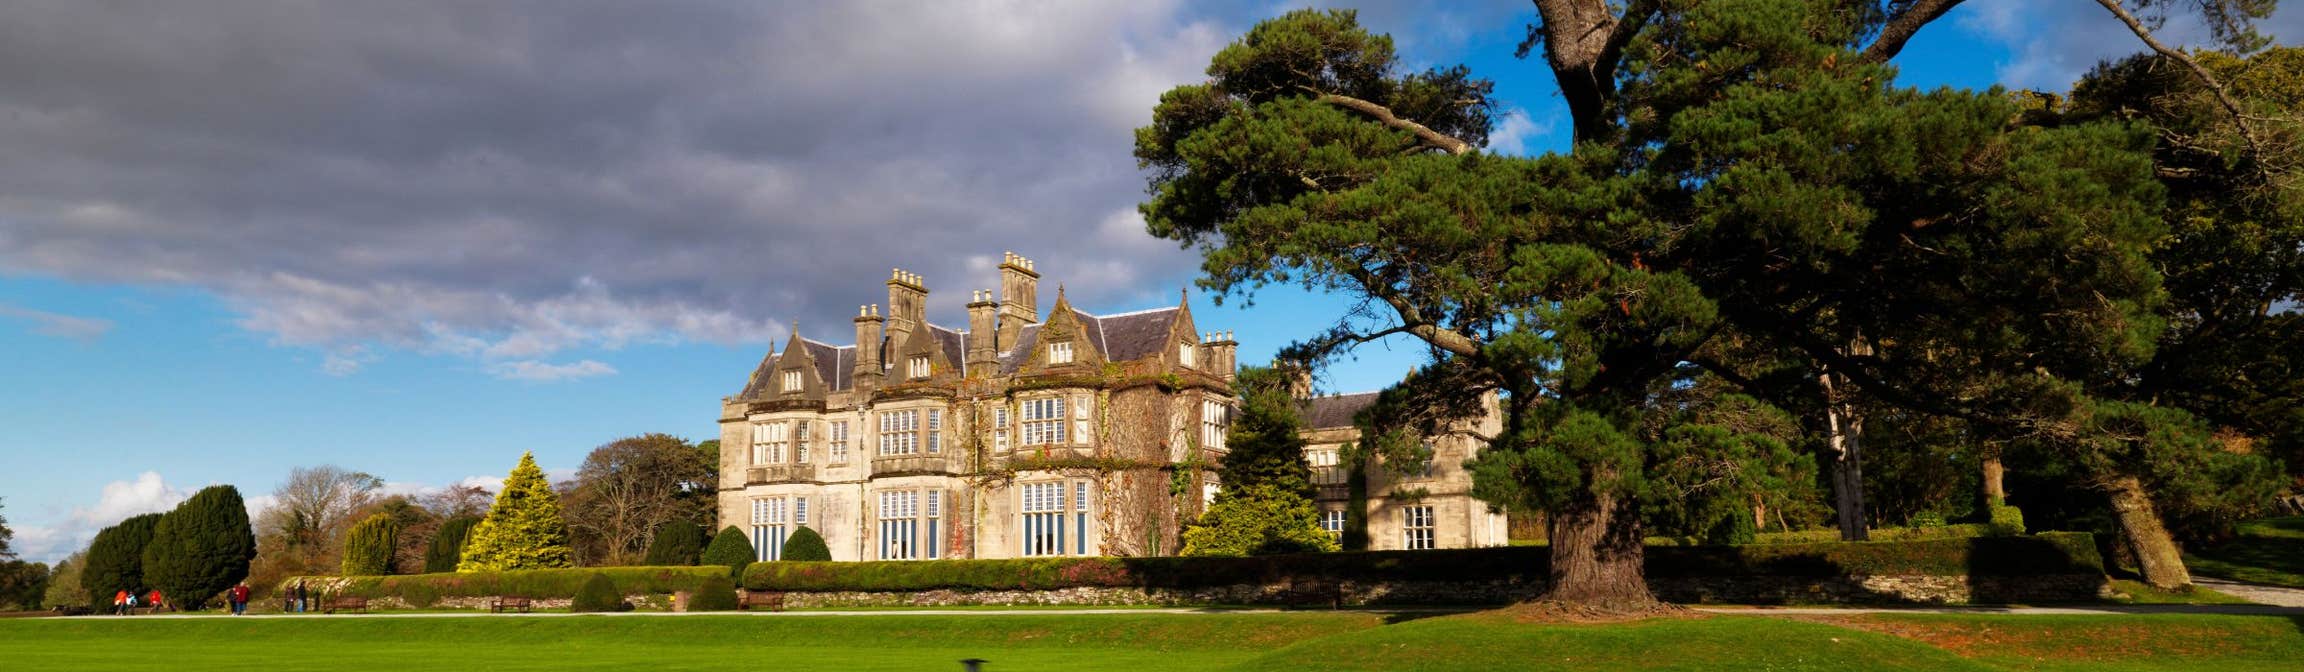 Image of Muckross House, Killarney National Park, County Kerry